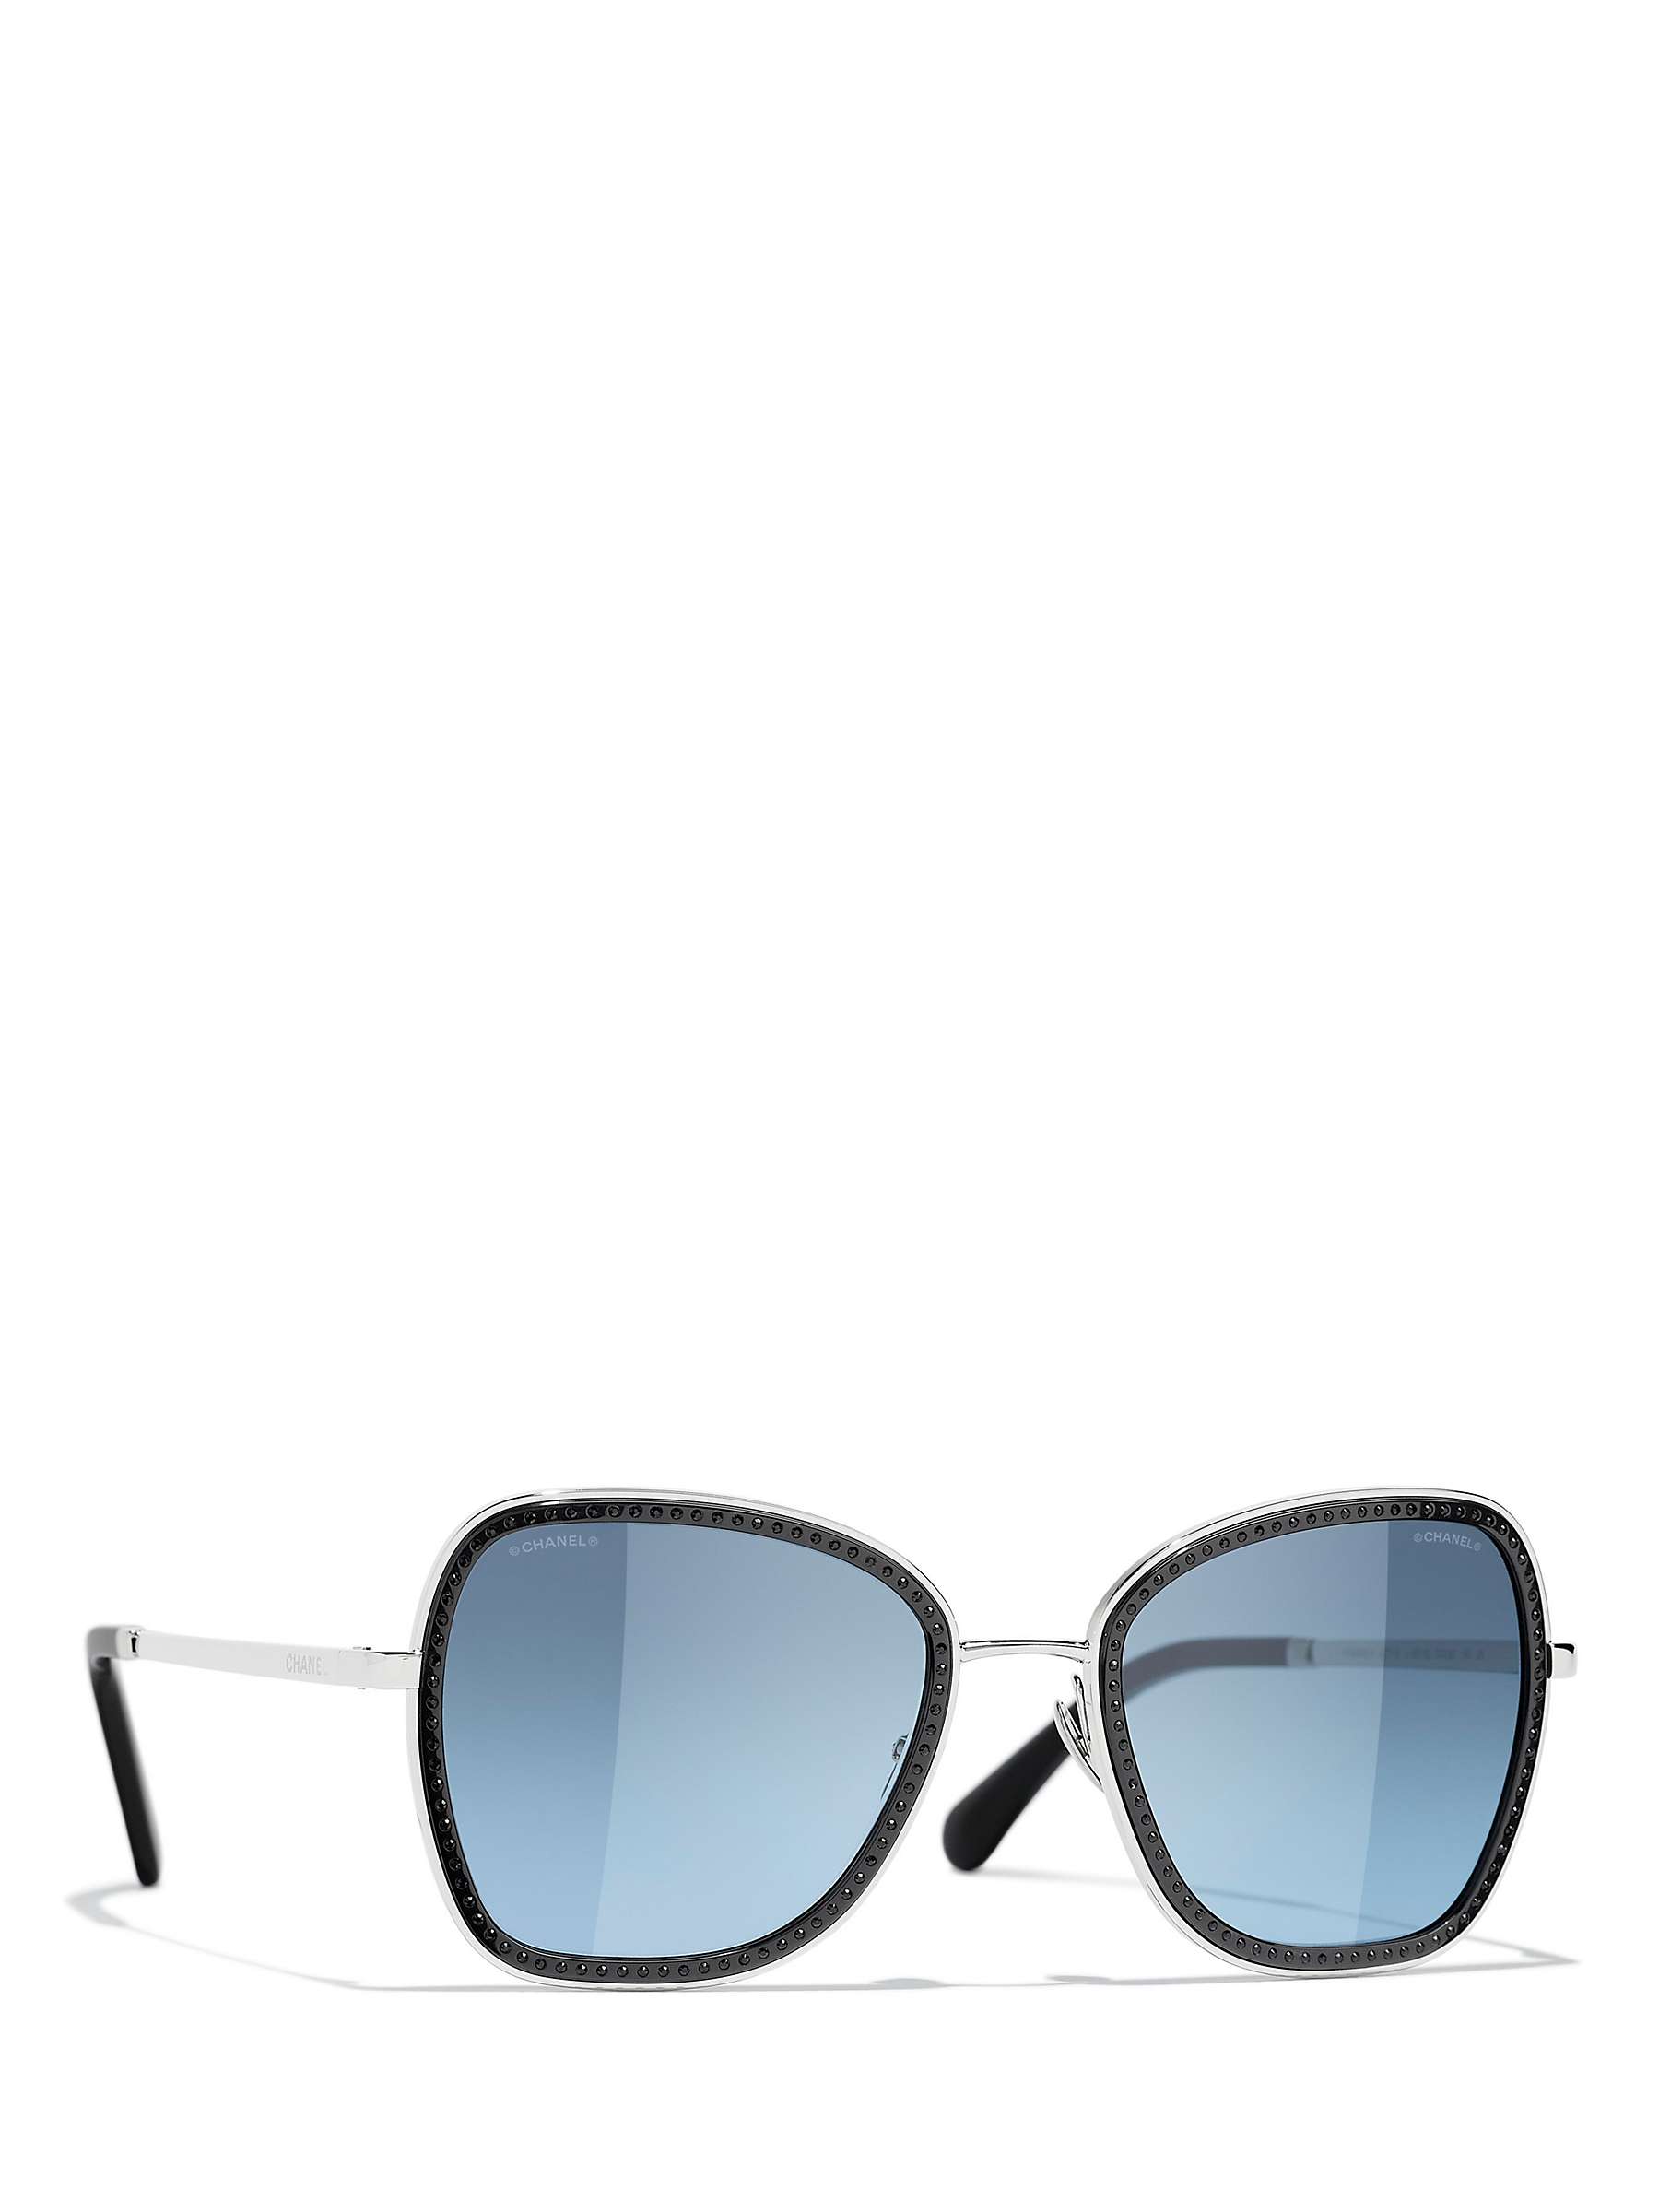 CHANEL Irregular Sunglasses CH4277B Silver/Blue Gradient at John